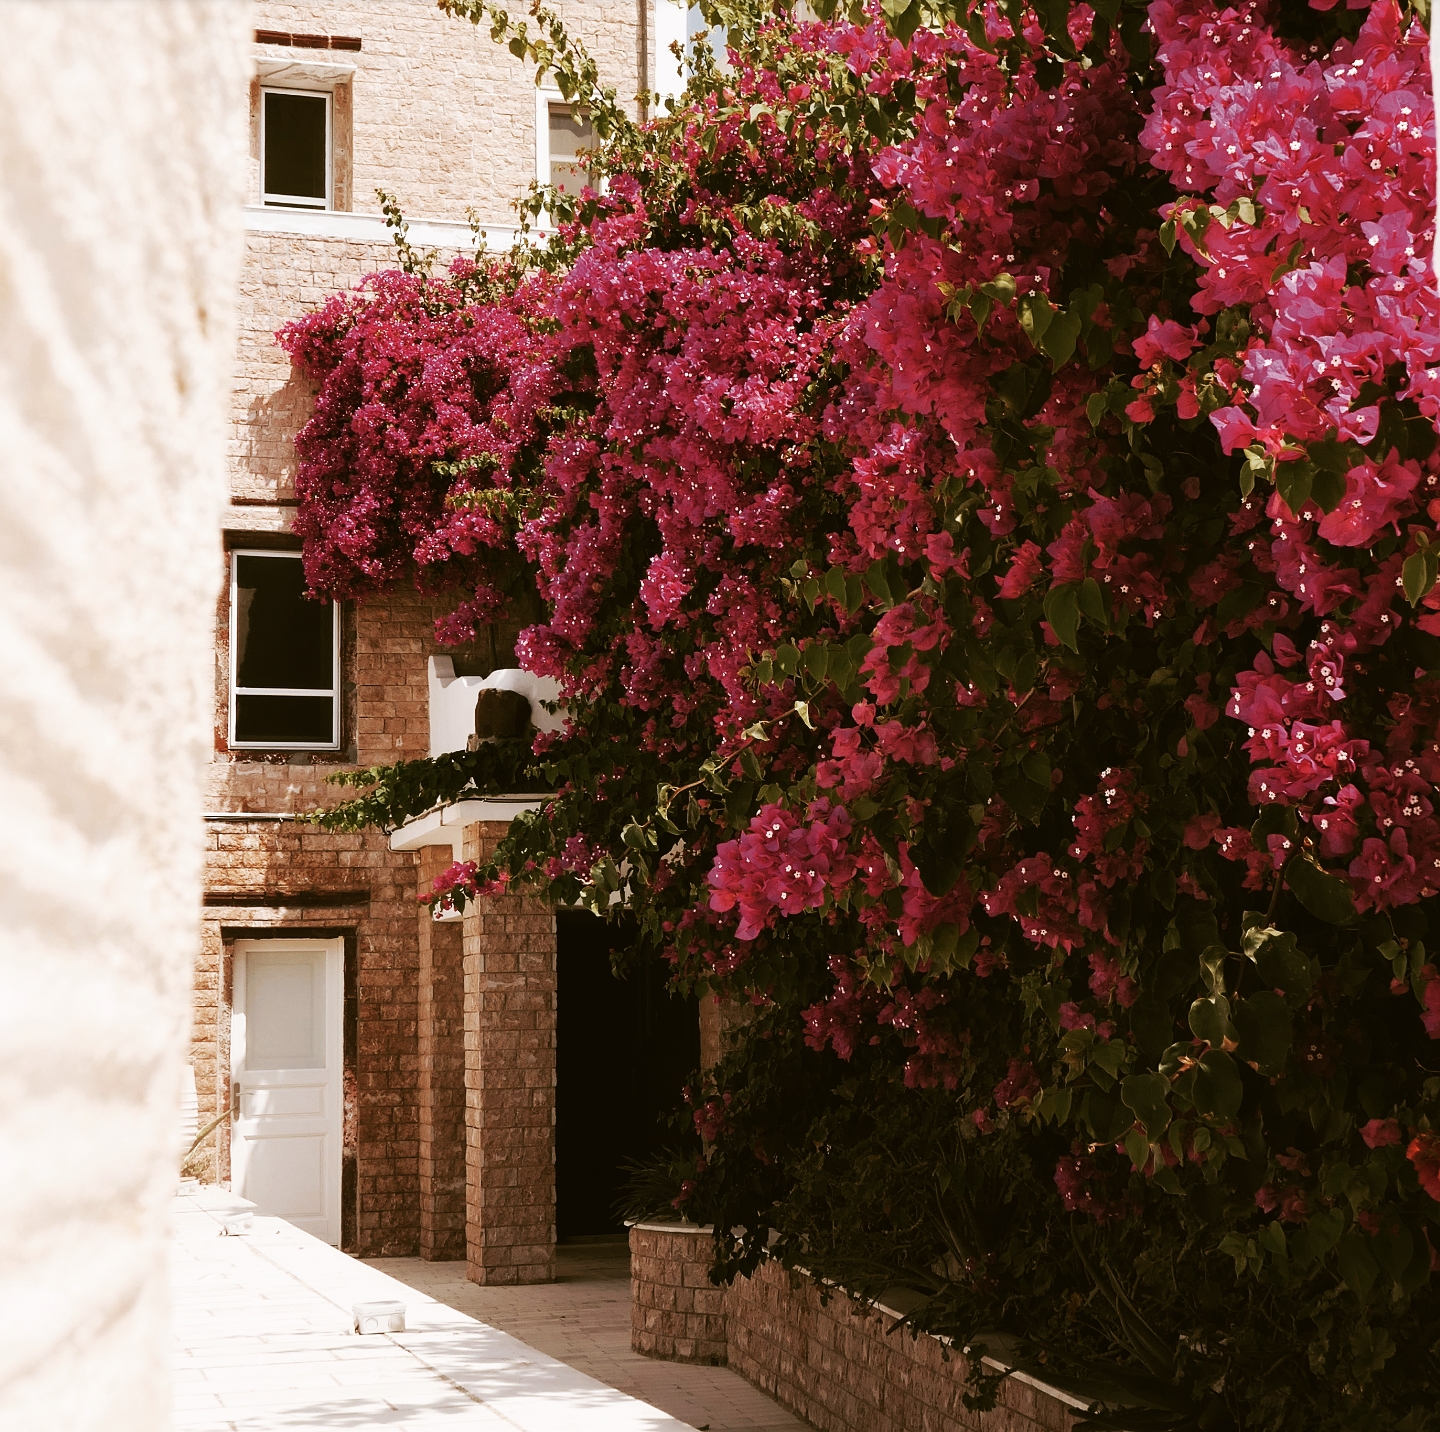 Santorini Dreaming | Greece Travel Diary - CHAMPAGNE + MACAROONS